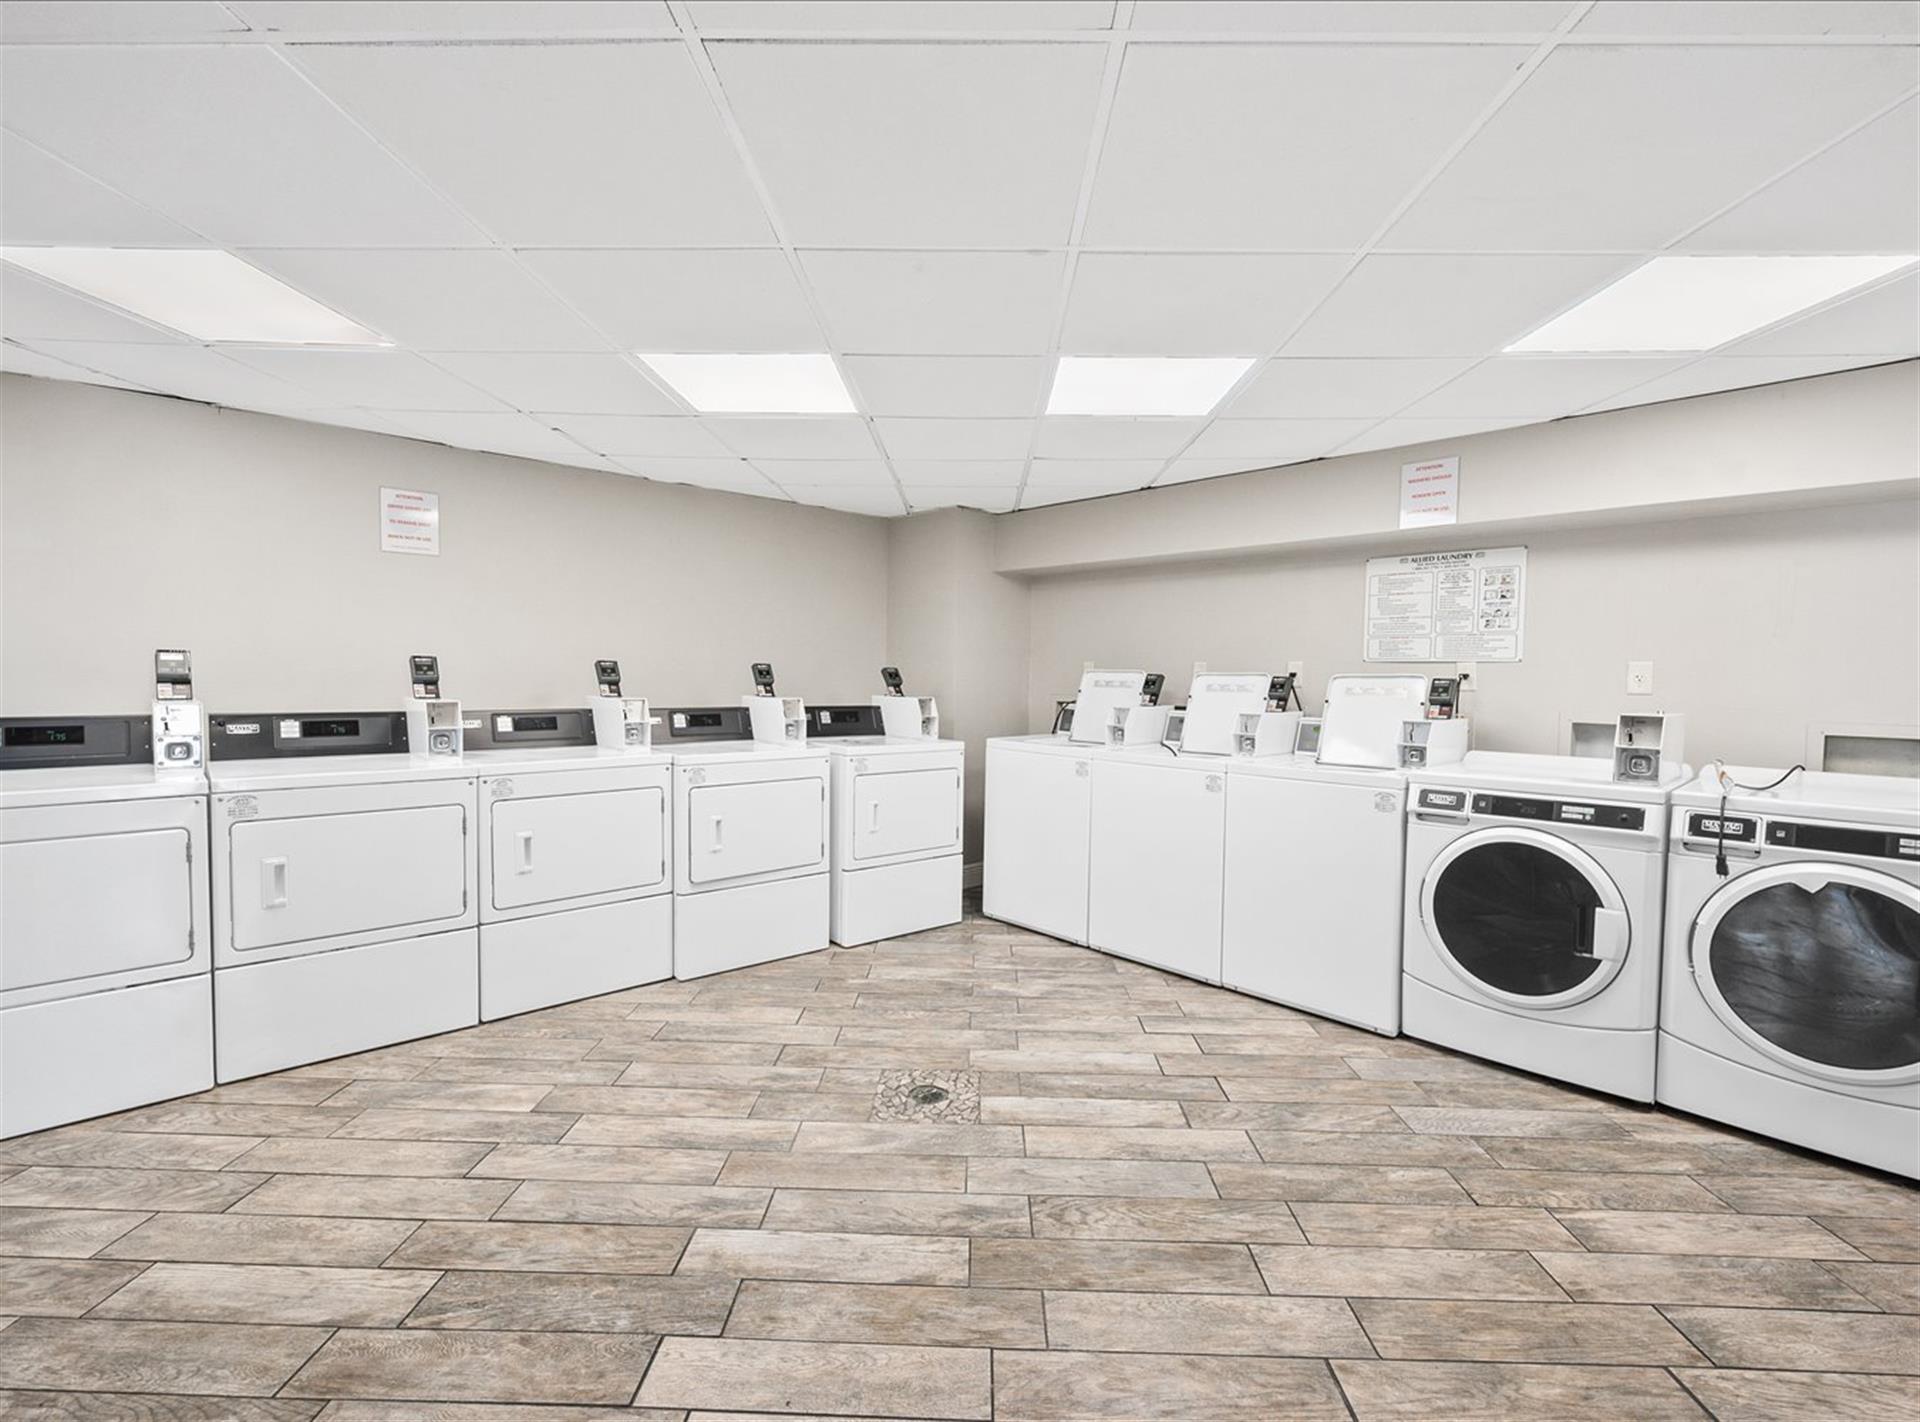 Fourth  Six Floor Laundry Facilities